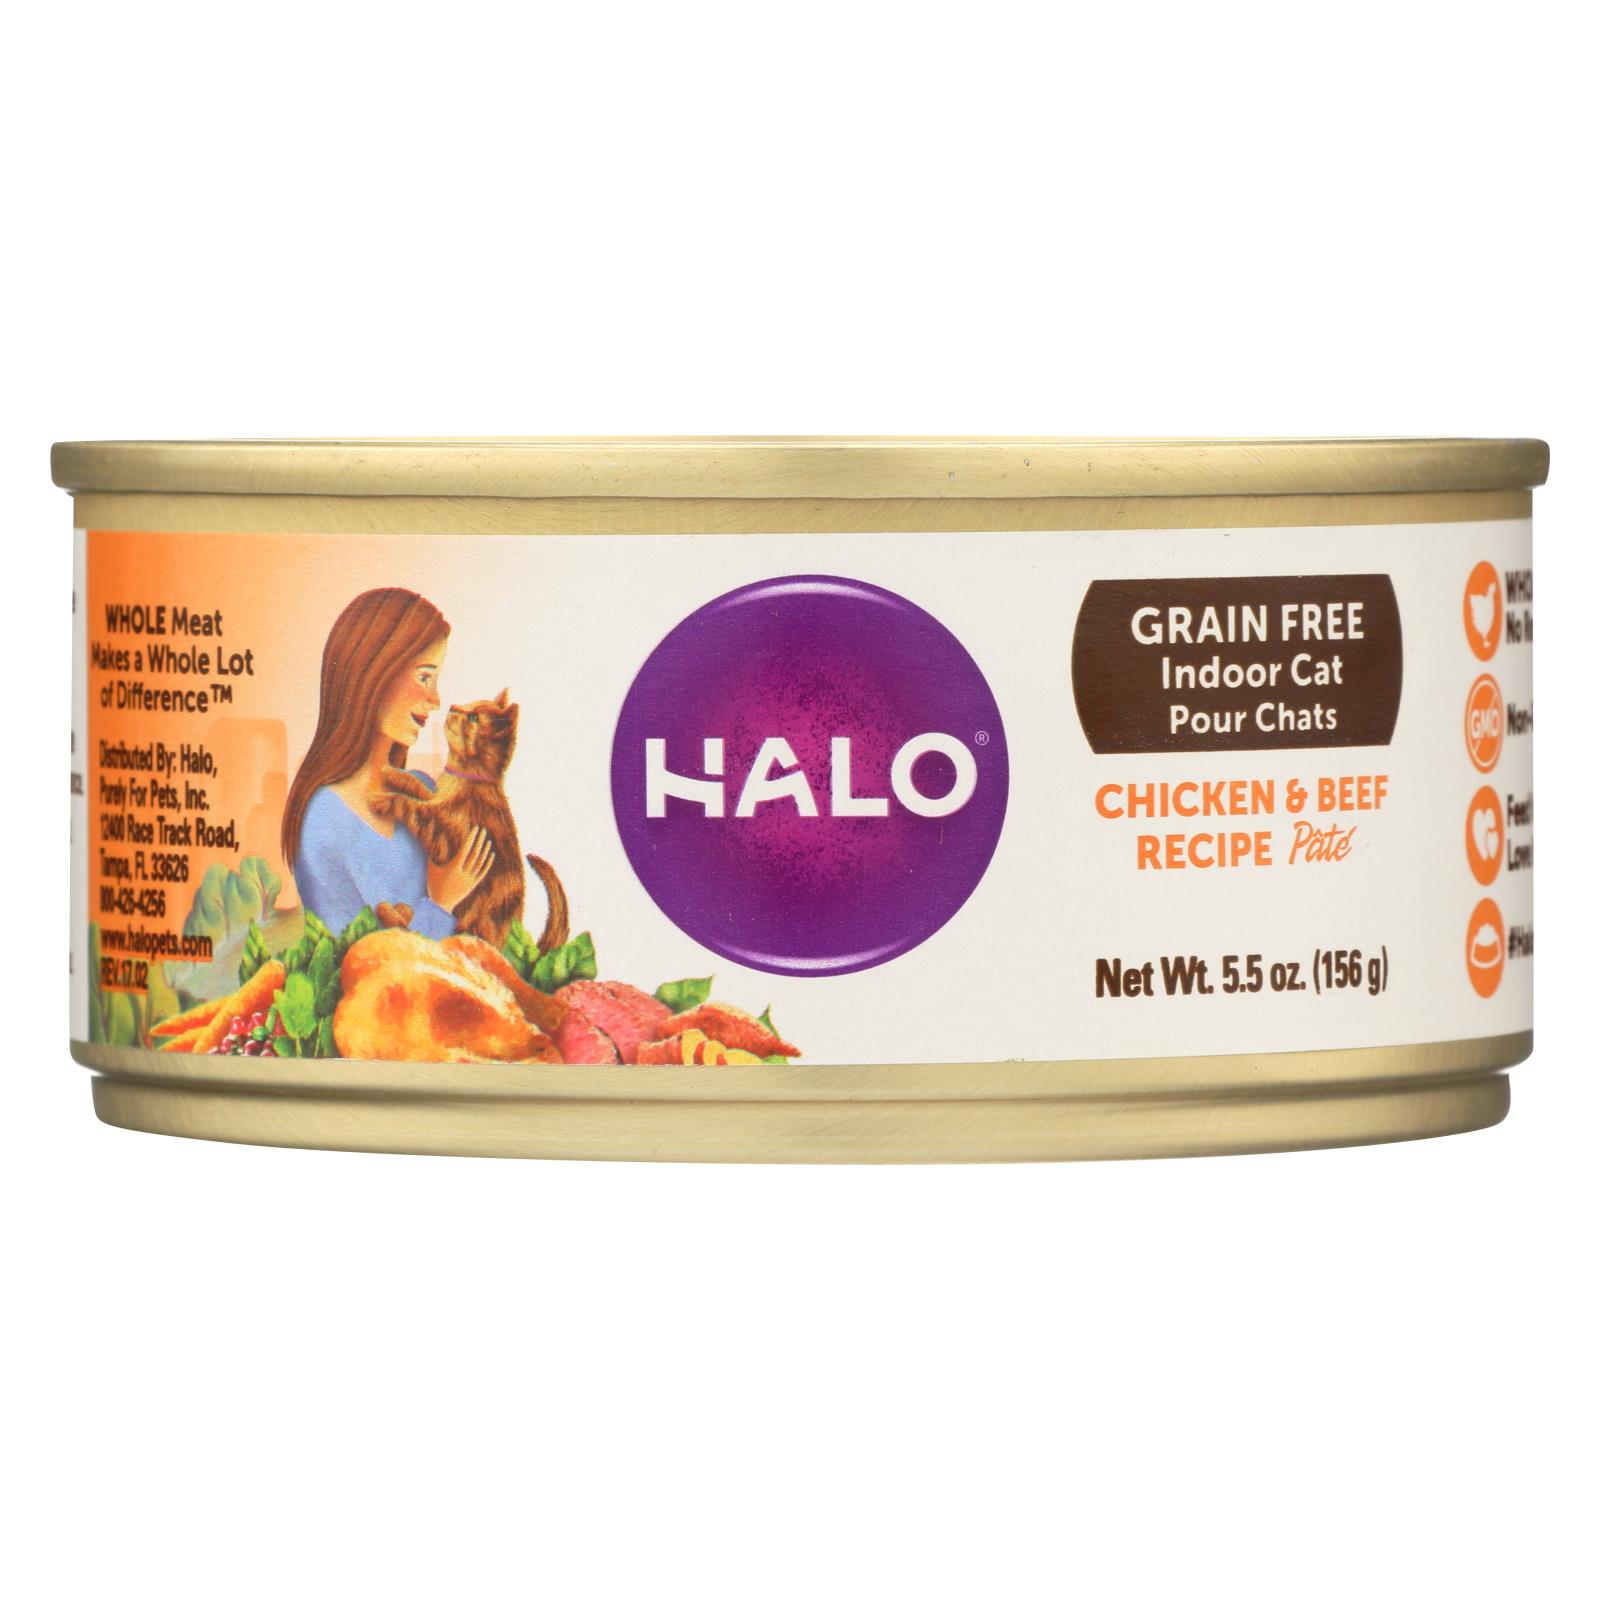 Halo Grain-Free Indoor Cat Chicken & Beef Recipe Pate - 12개 묶음상품 - 5.5 OZ